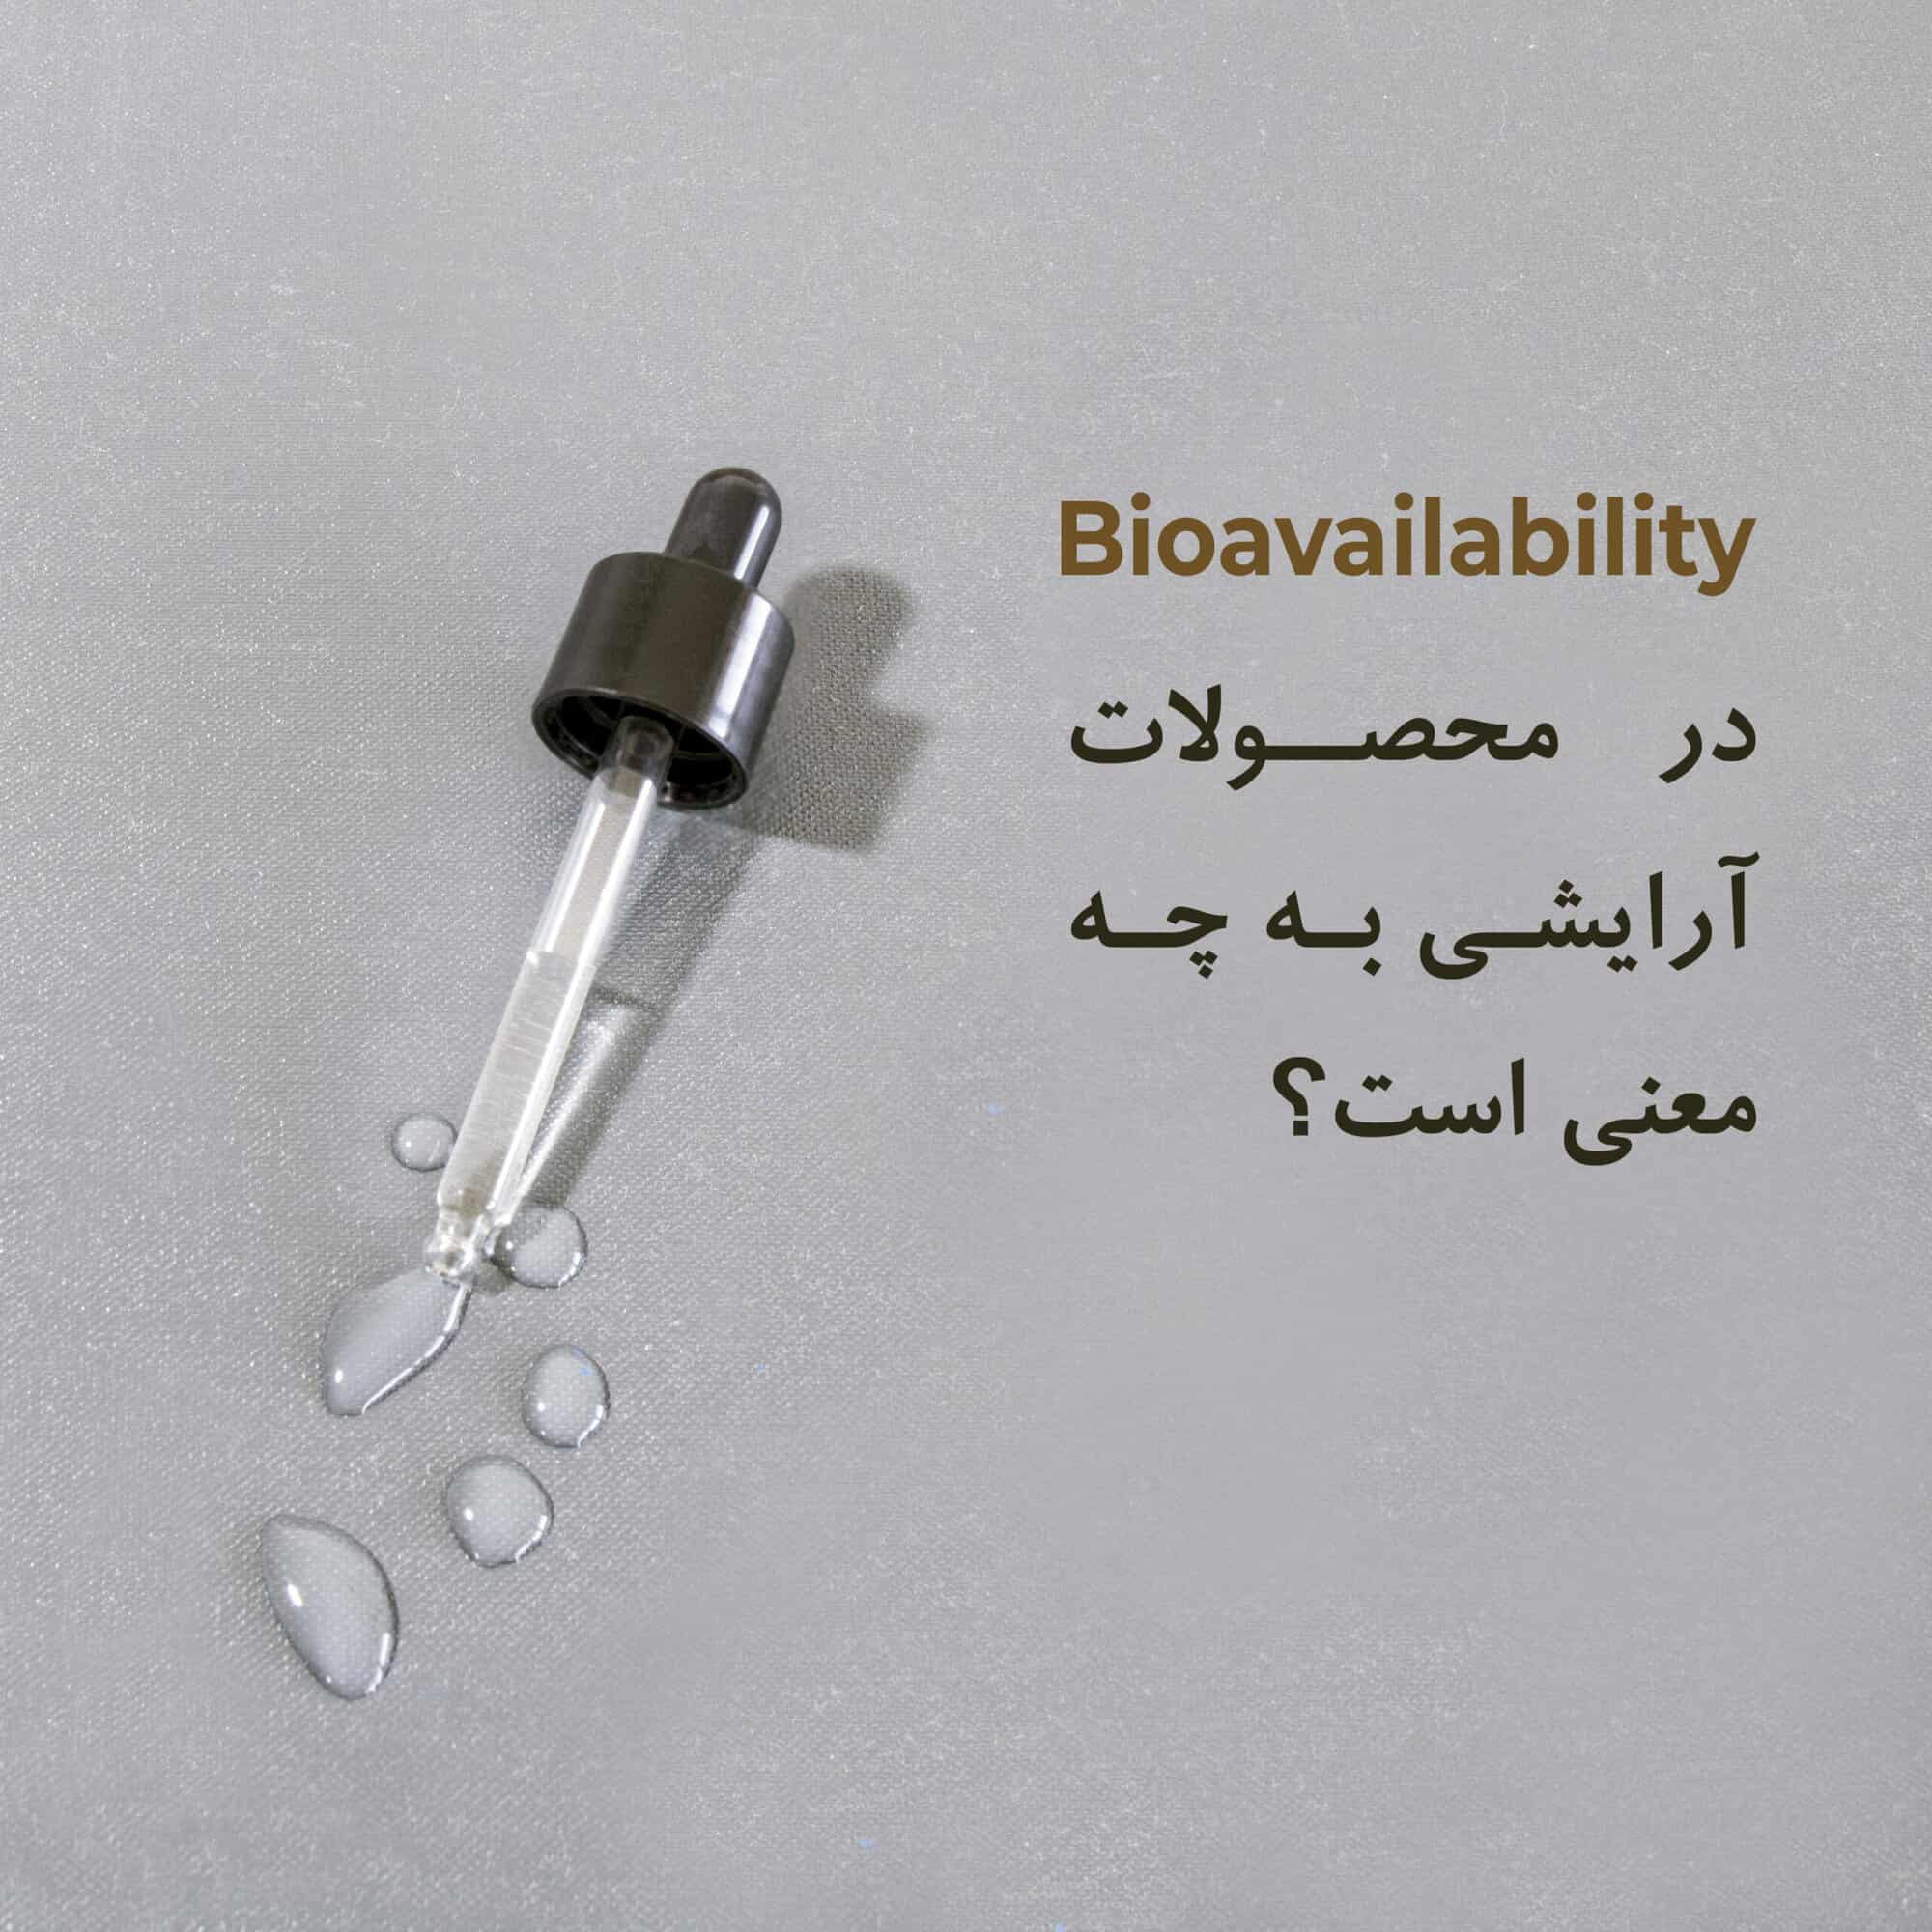 bioavailability